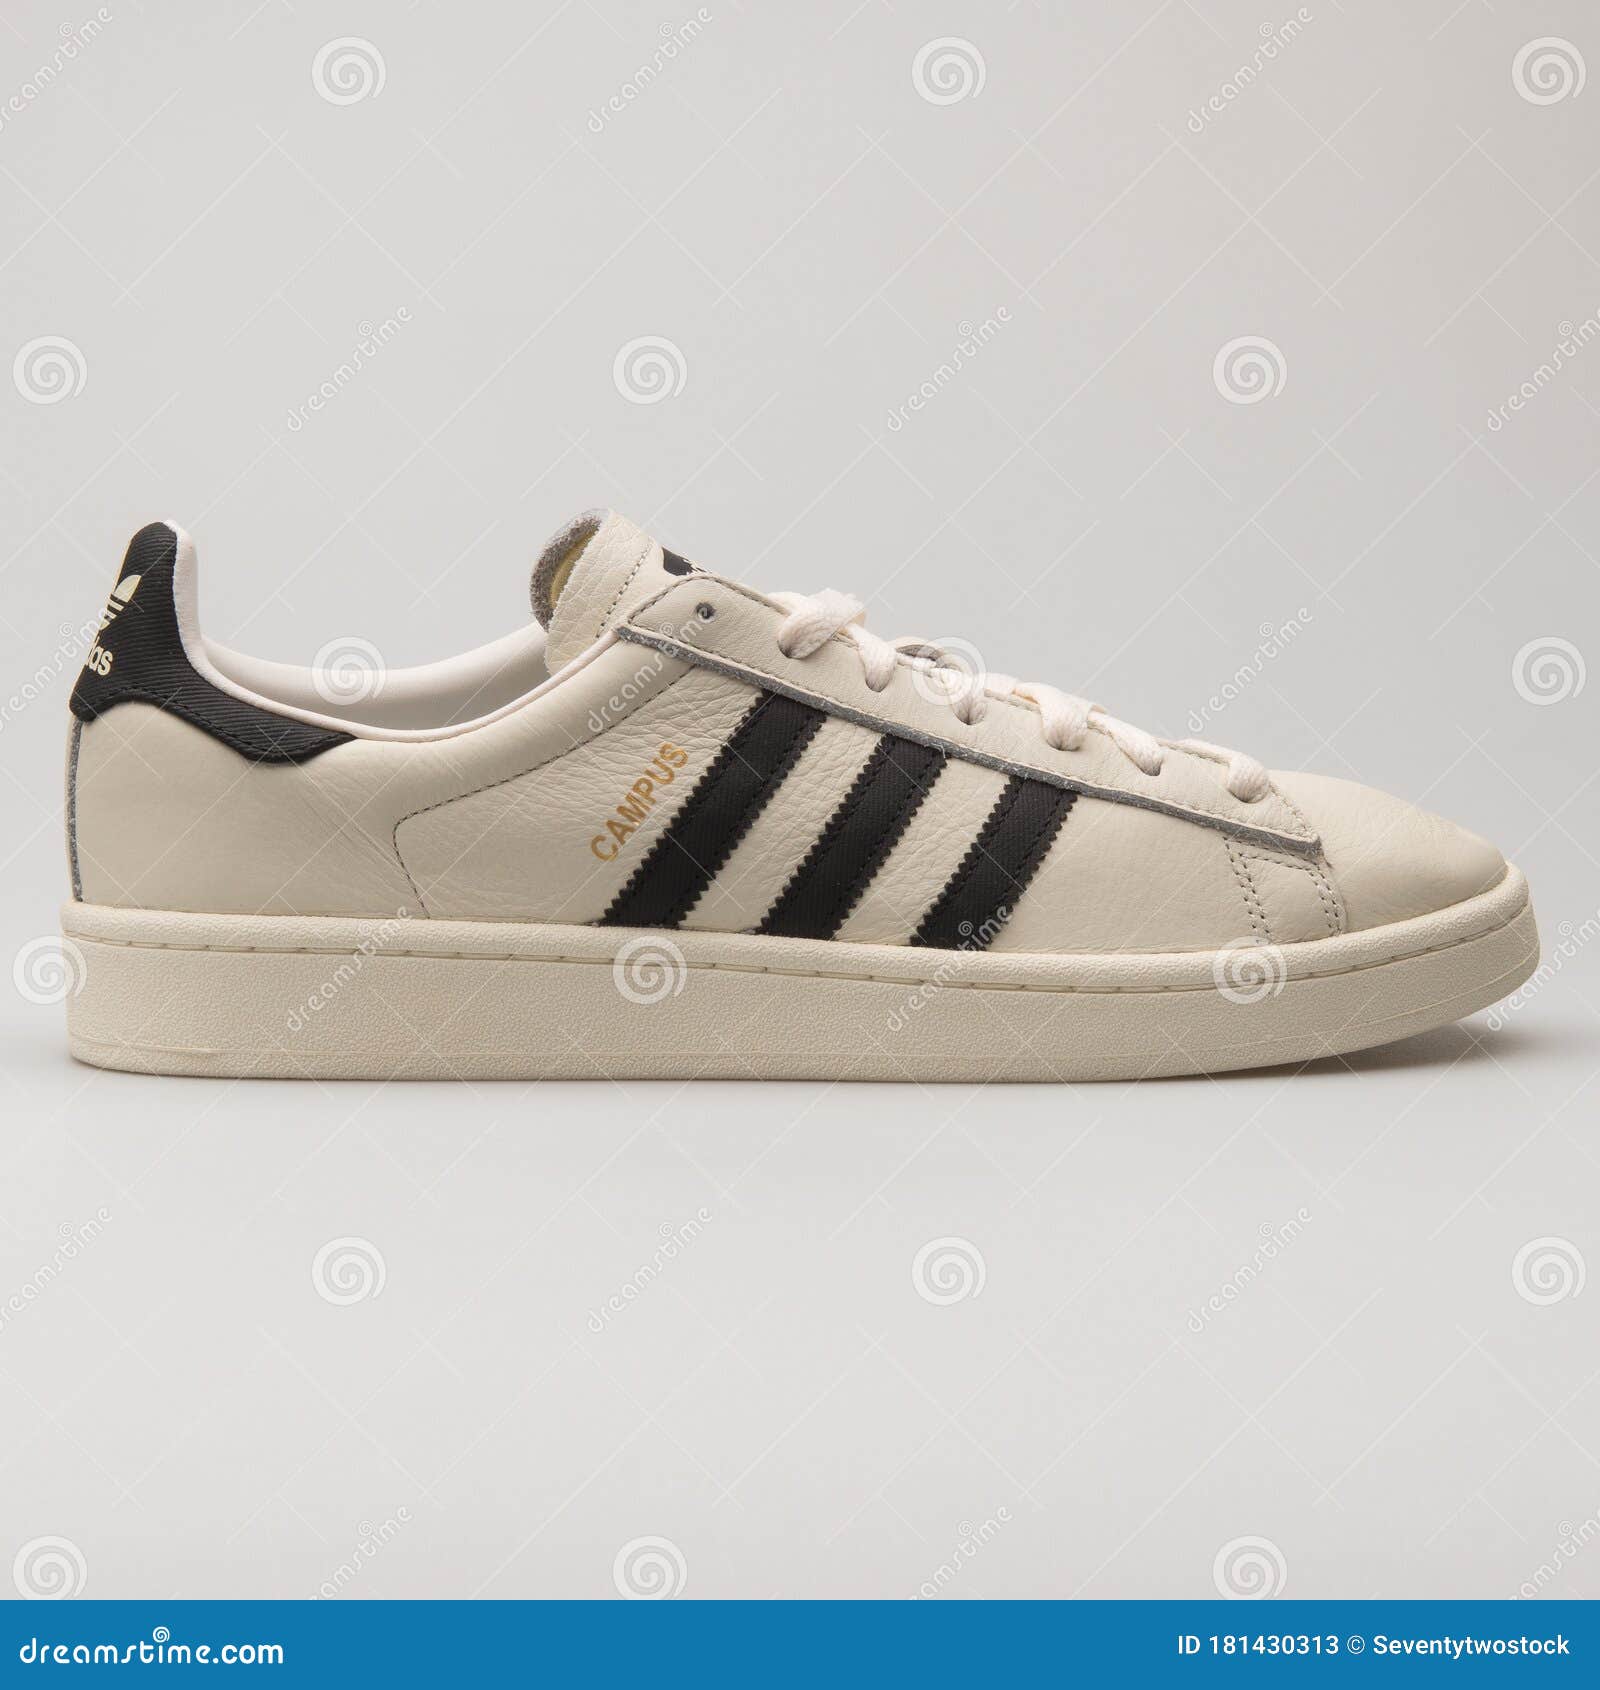 Adidas Campus Beige and Black Sneaker Editorial Stock Photo ... مولدات كهرباء للايجار بجدة